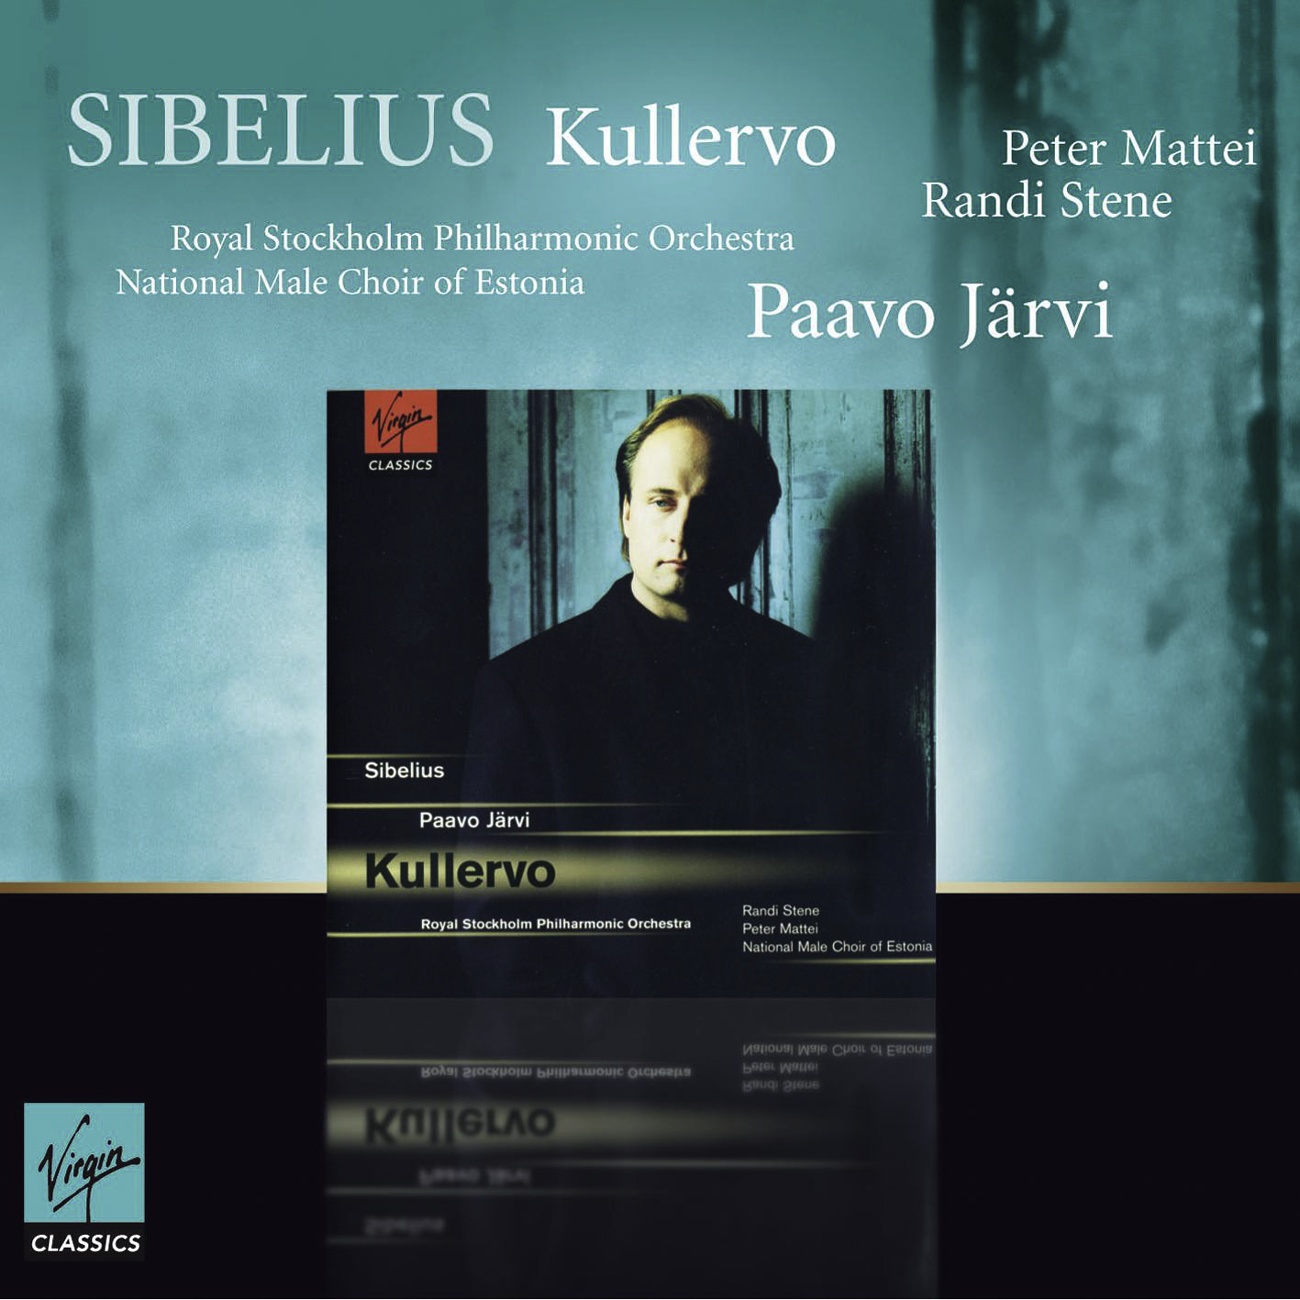 Kullervo - Symphonisches Gedicht, Op. 7, fur Soli, Chor und Orchester (Kalevala): III - Kullervo och hans syster (Kullervo and his sister) - Allegro vivace